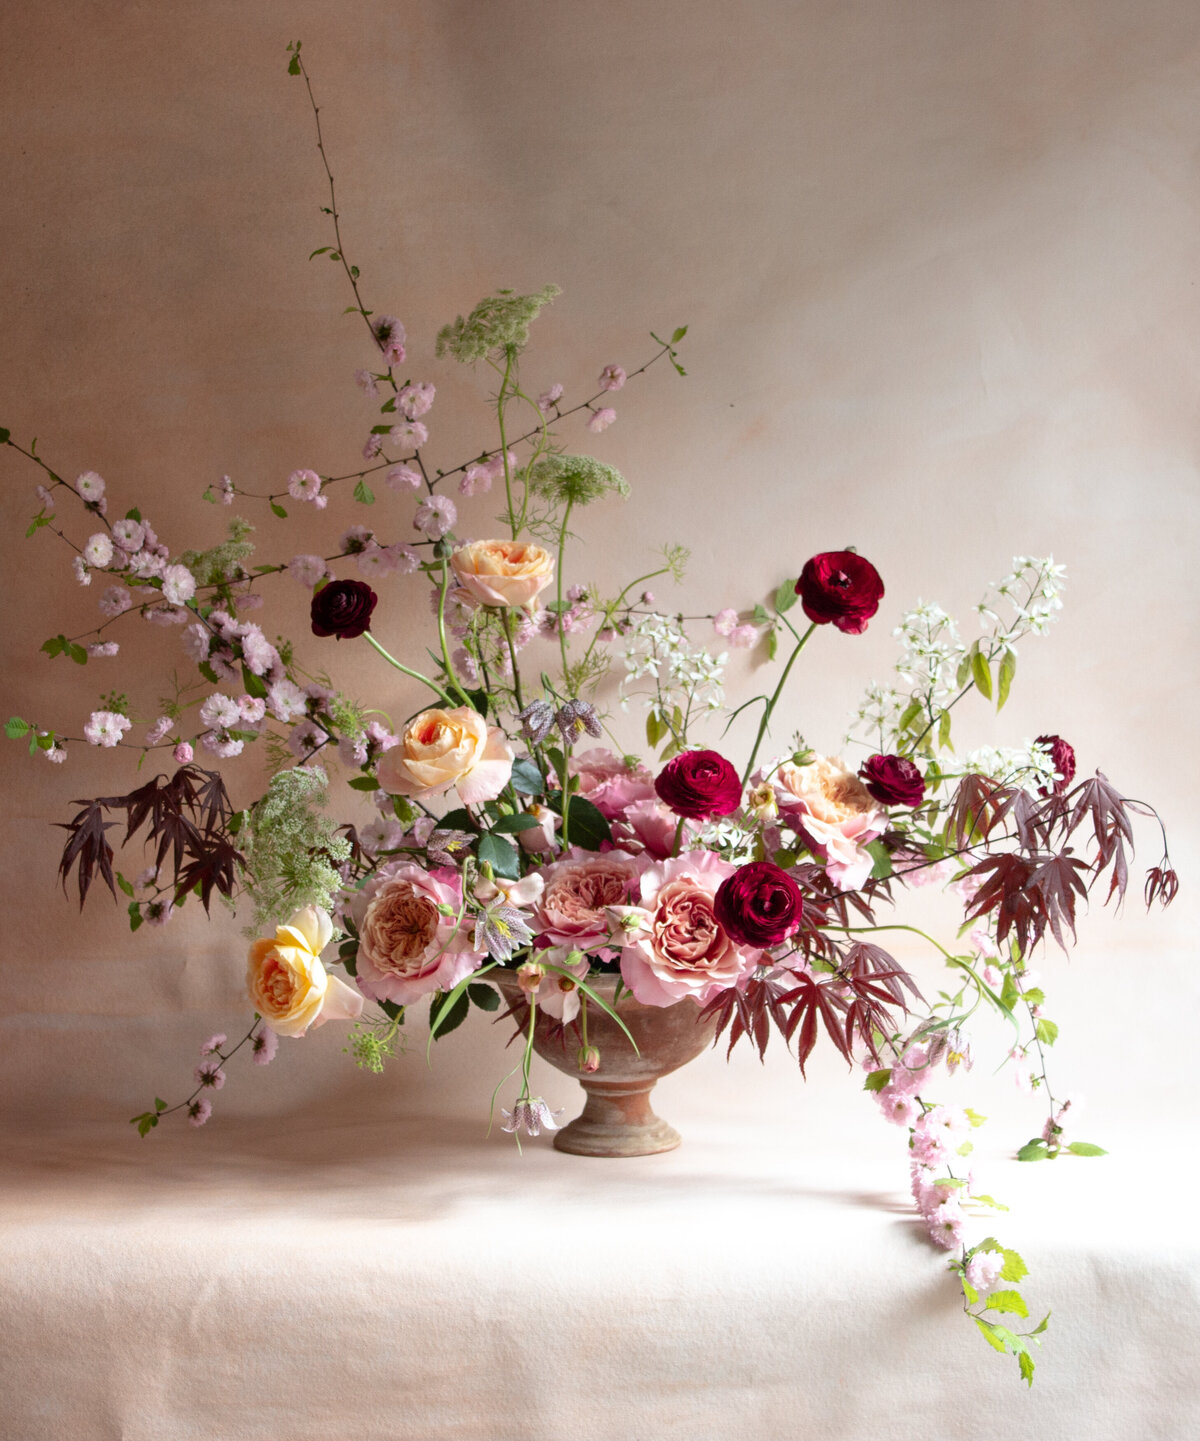 Atelier-Carmel-Wedding-Florist-GALLERY-Arrangements-40